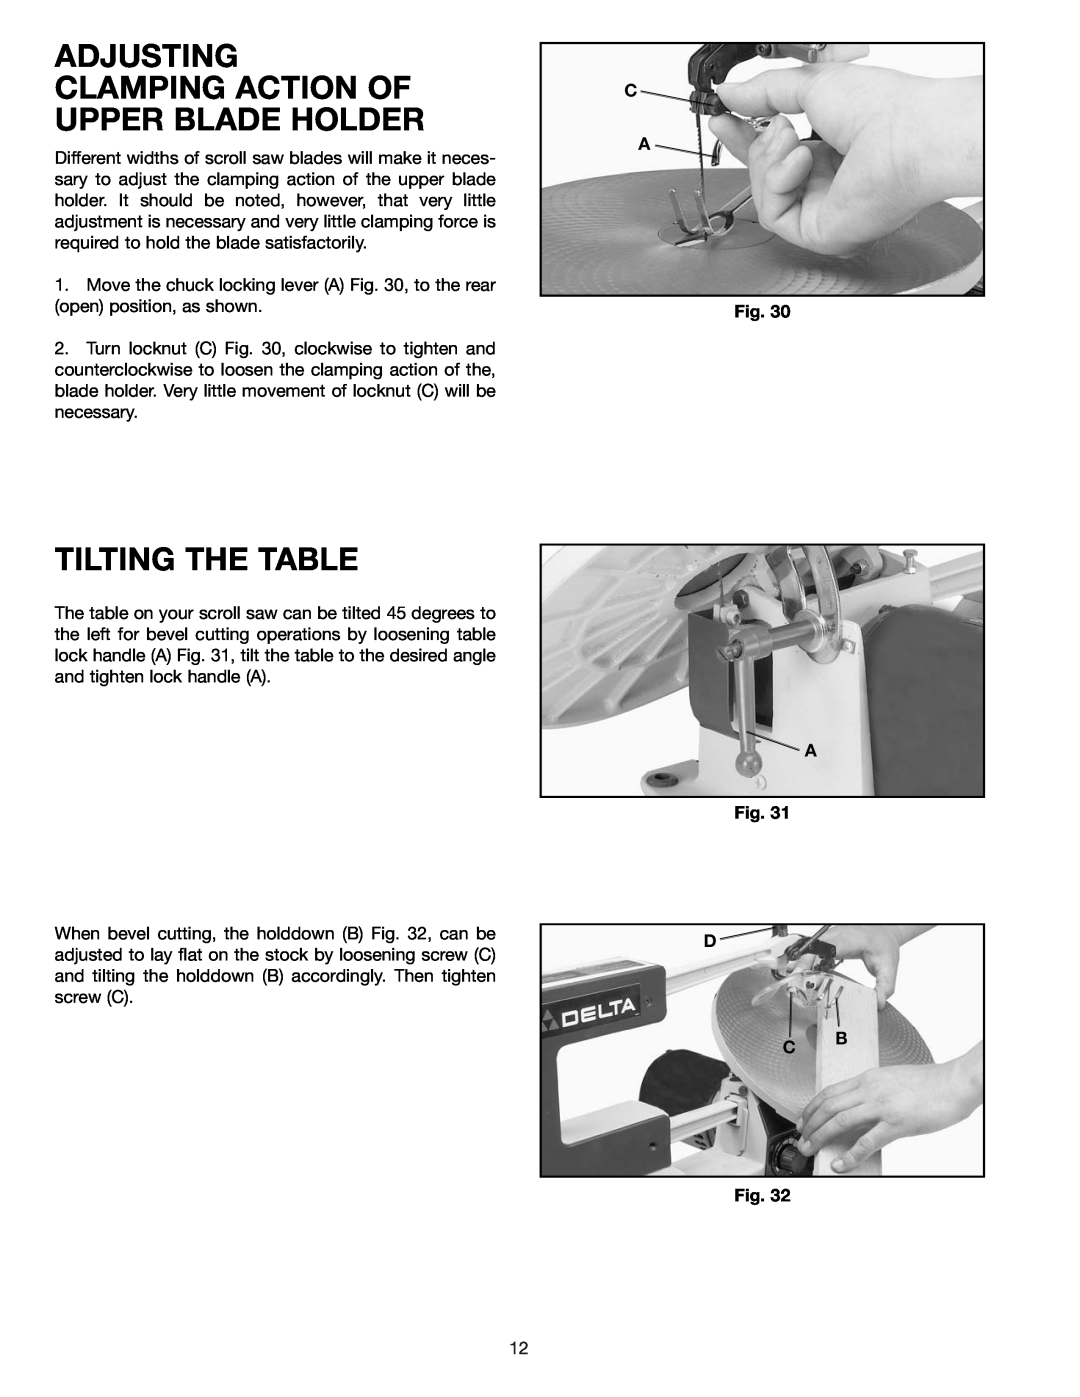 Delta 40-540 warranty Adjusting Clamping Action Of Upper Blade Holder, Tilting The Table, D C B 